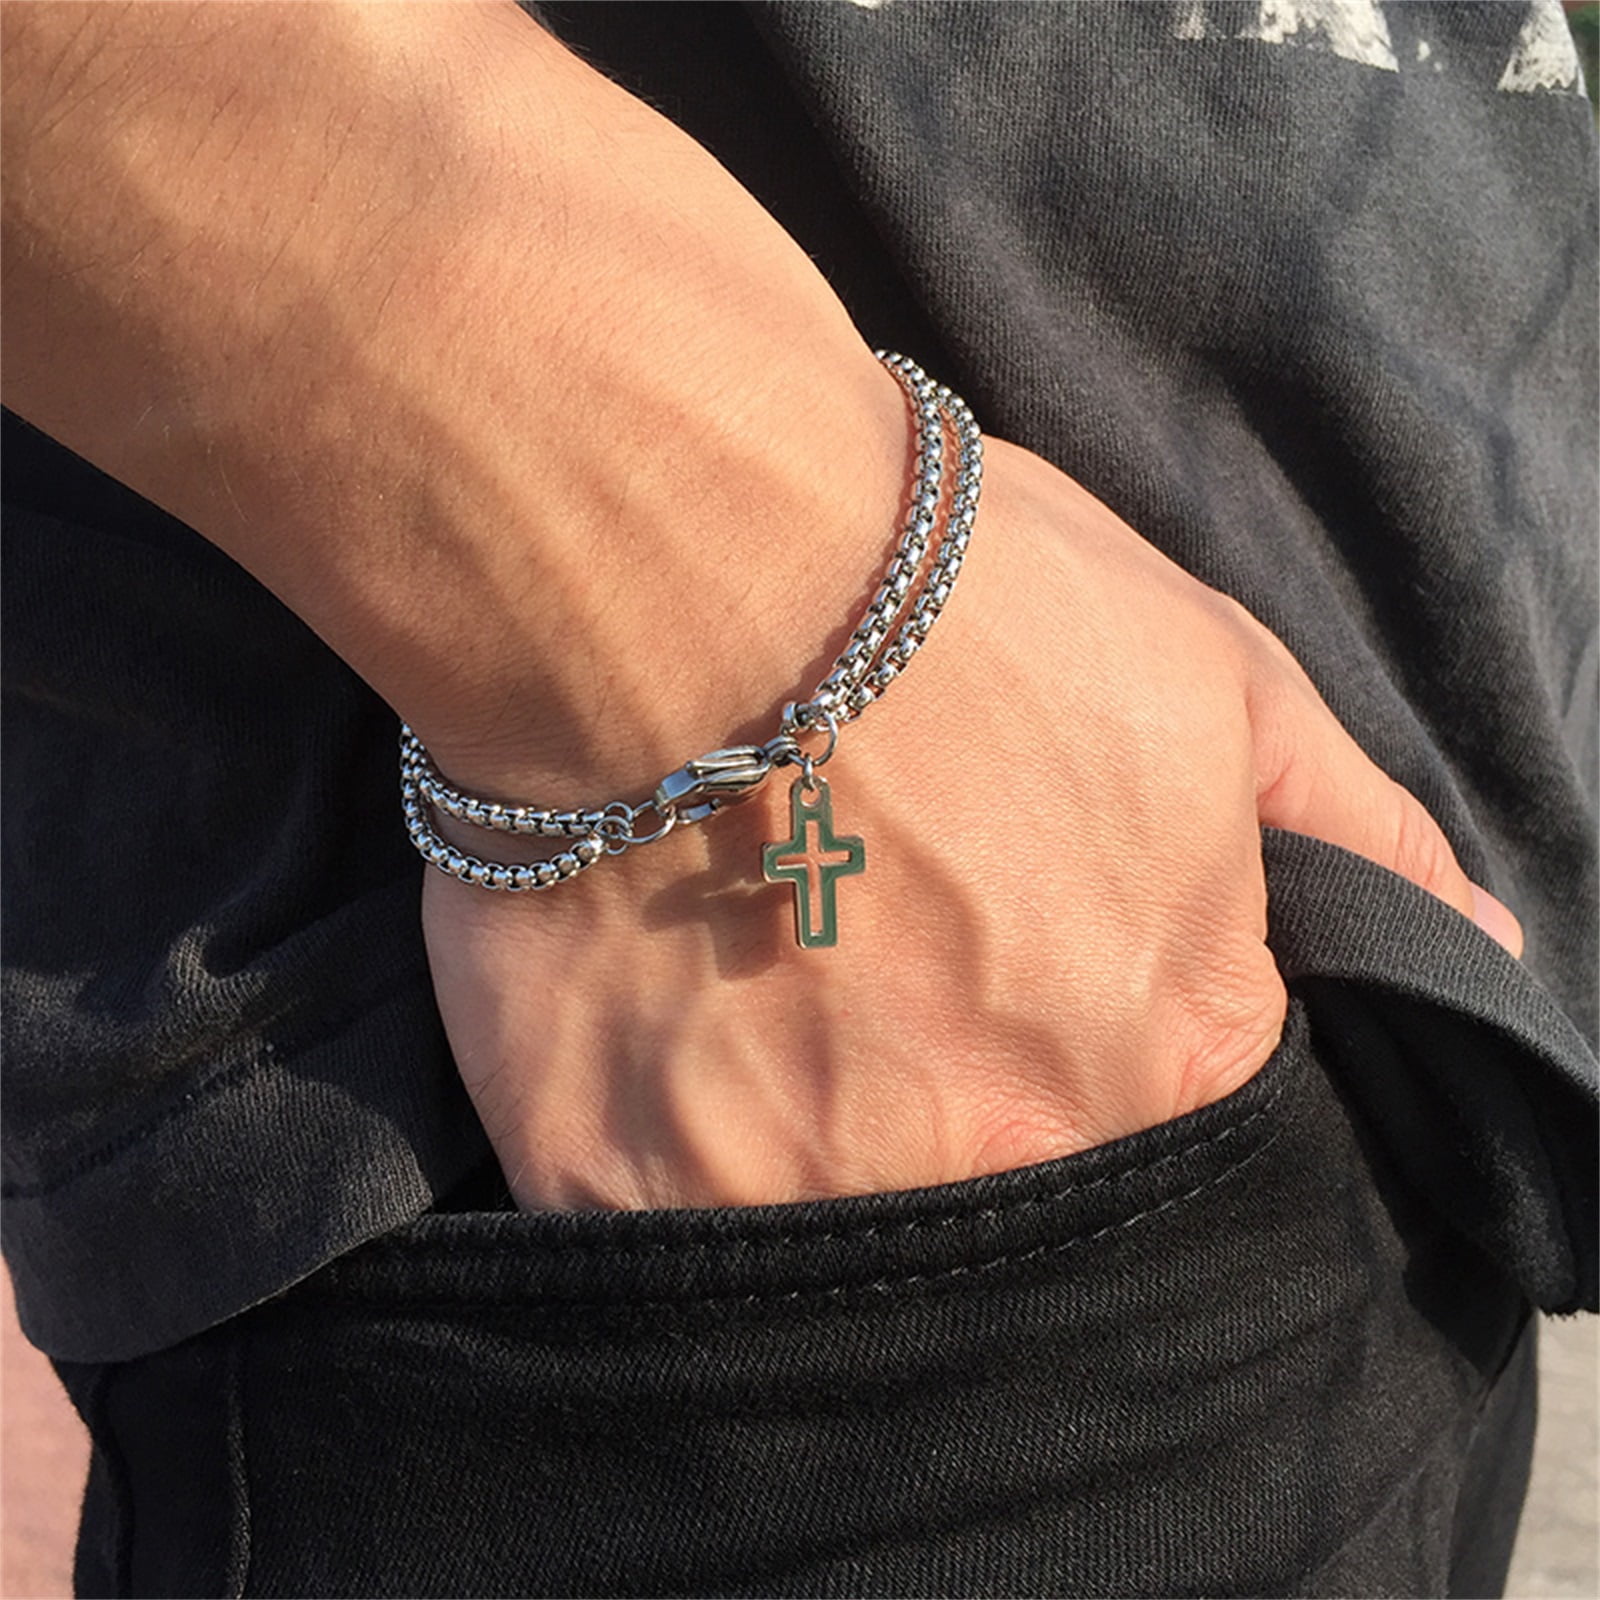 Men's Cross Bracelets | Shop at Trendhim